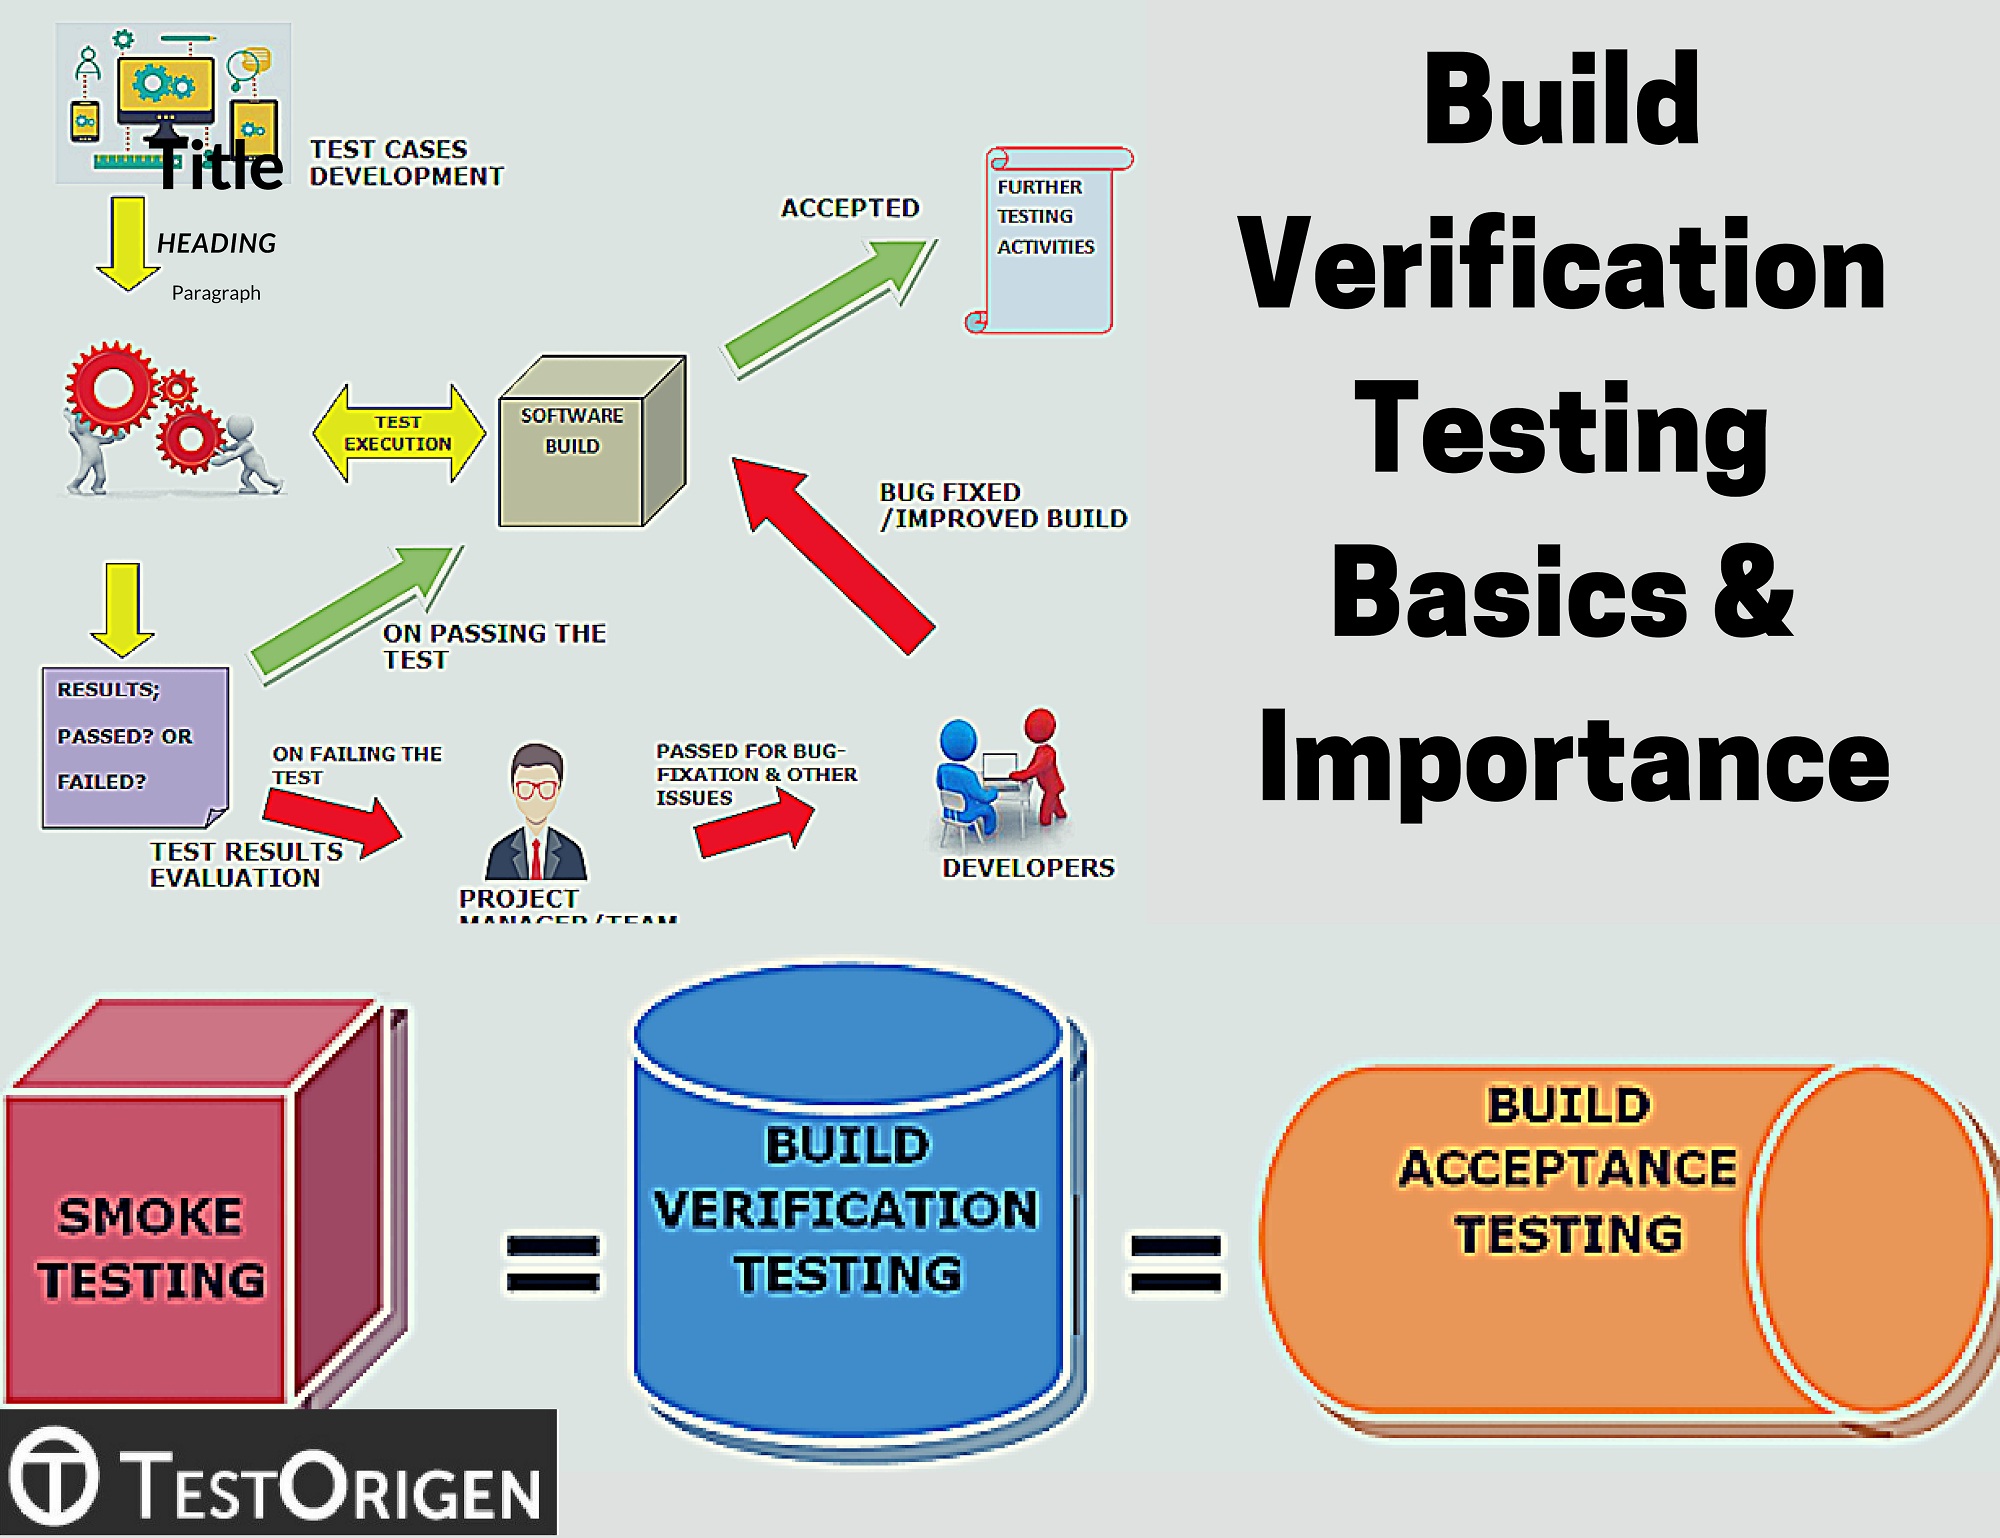 Build Verification Testing Basics & Importance